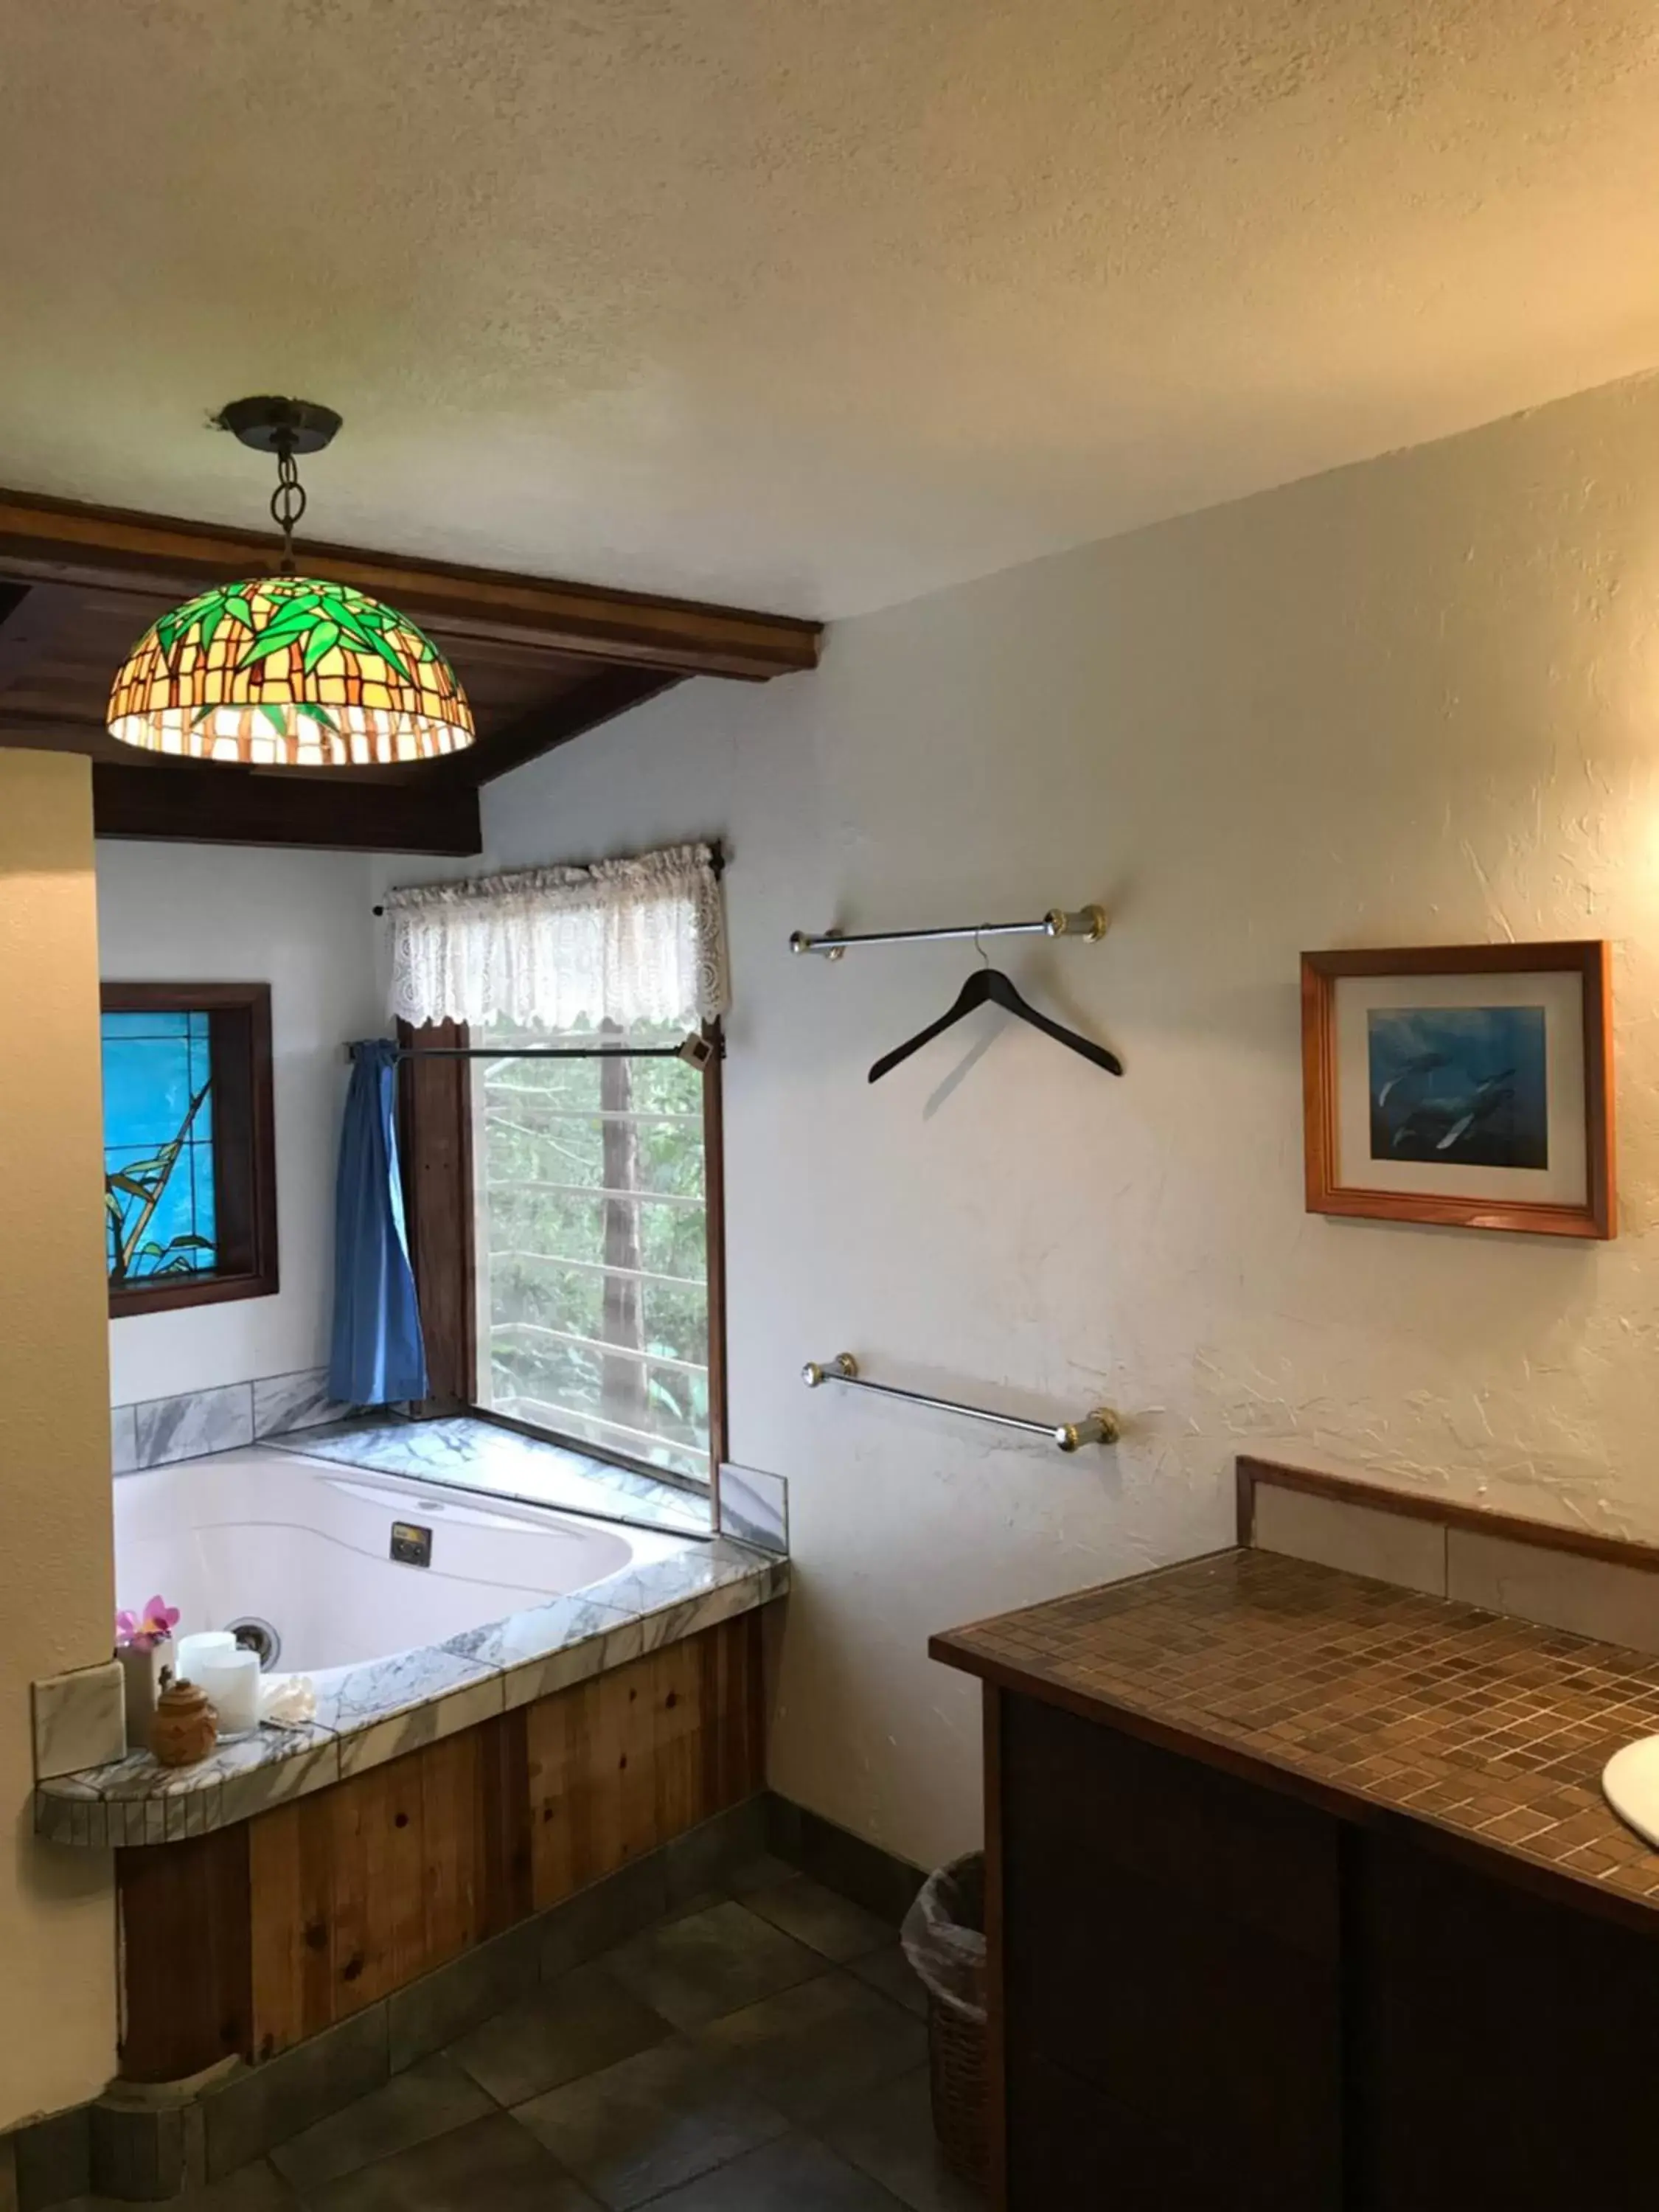 Bathroom in Hale Maluhia Country Inn